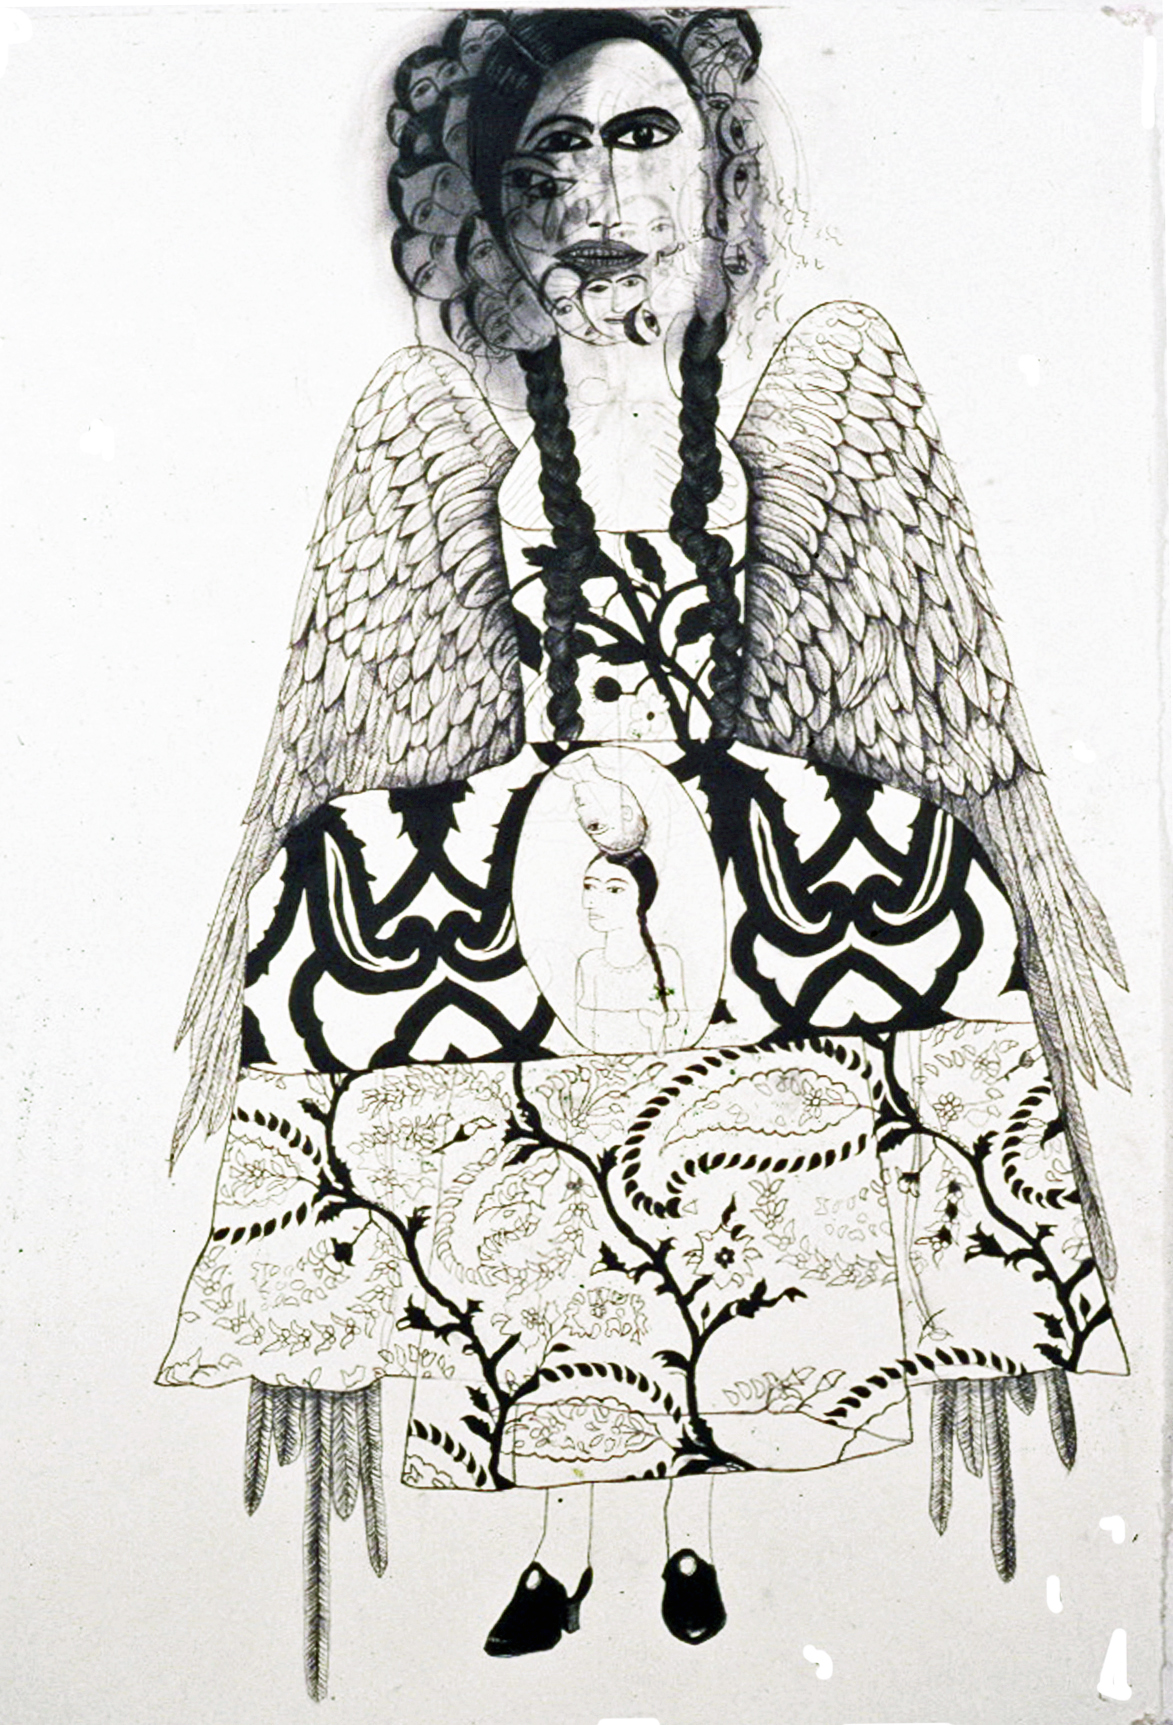 Samira Abbassi, Annunciation 2007
Charcoal on papier, 111.76 x 76.2 cm 